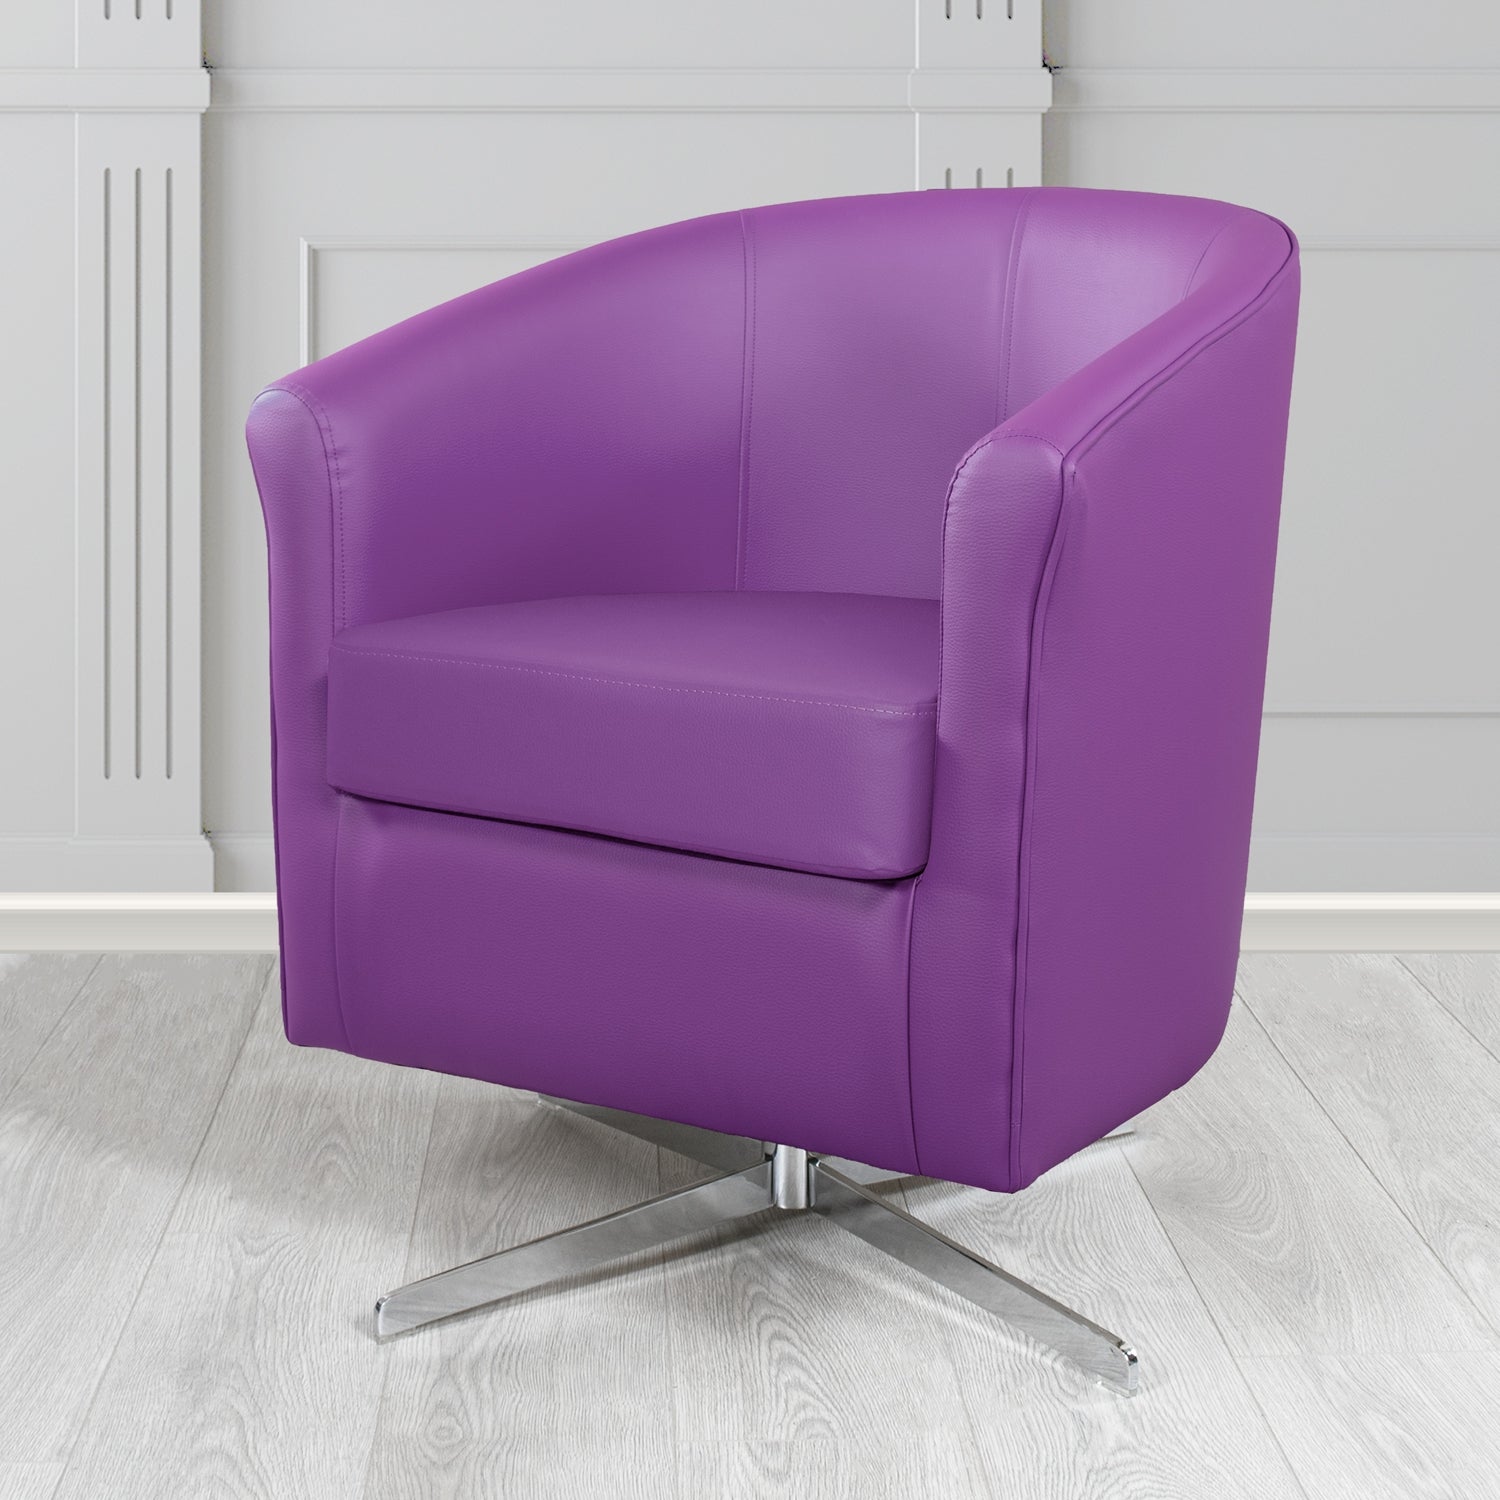 Cannes Swivel Tub Chair in Just Colour Grape Crib 5 Faux Leather - The Tub Chair Shop